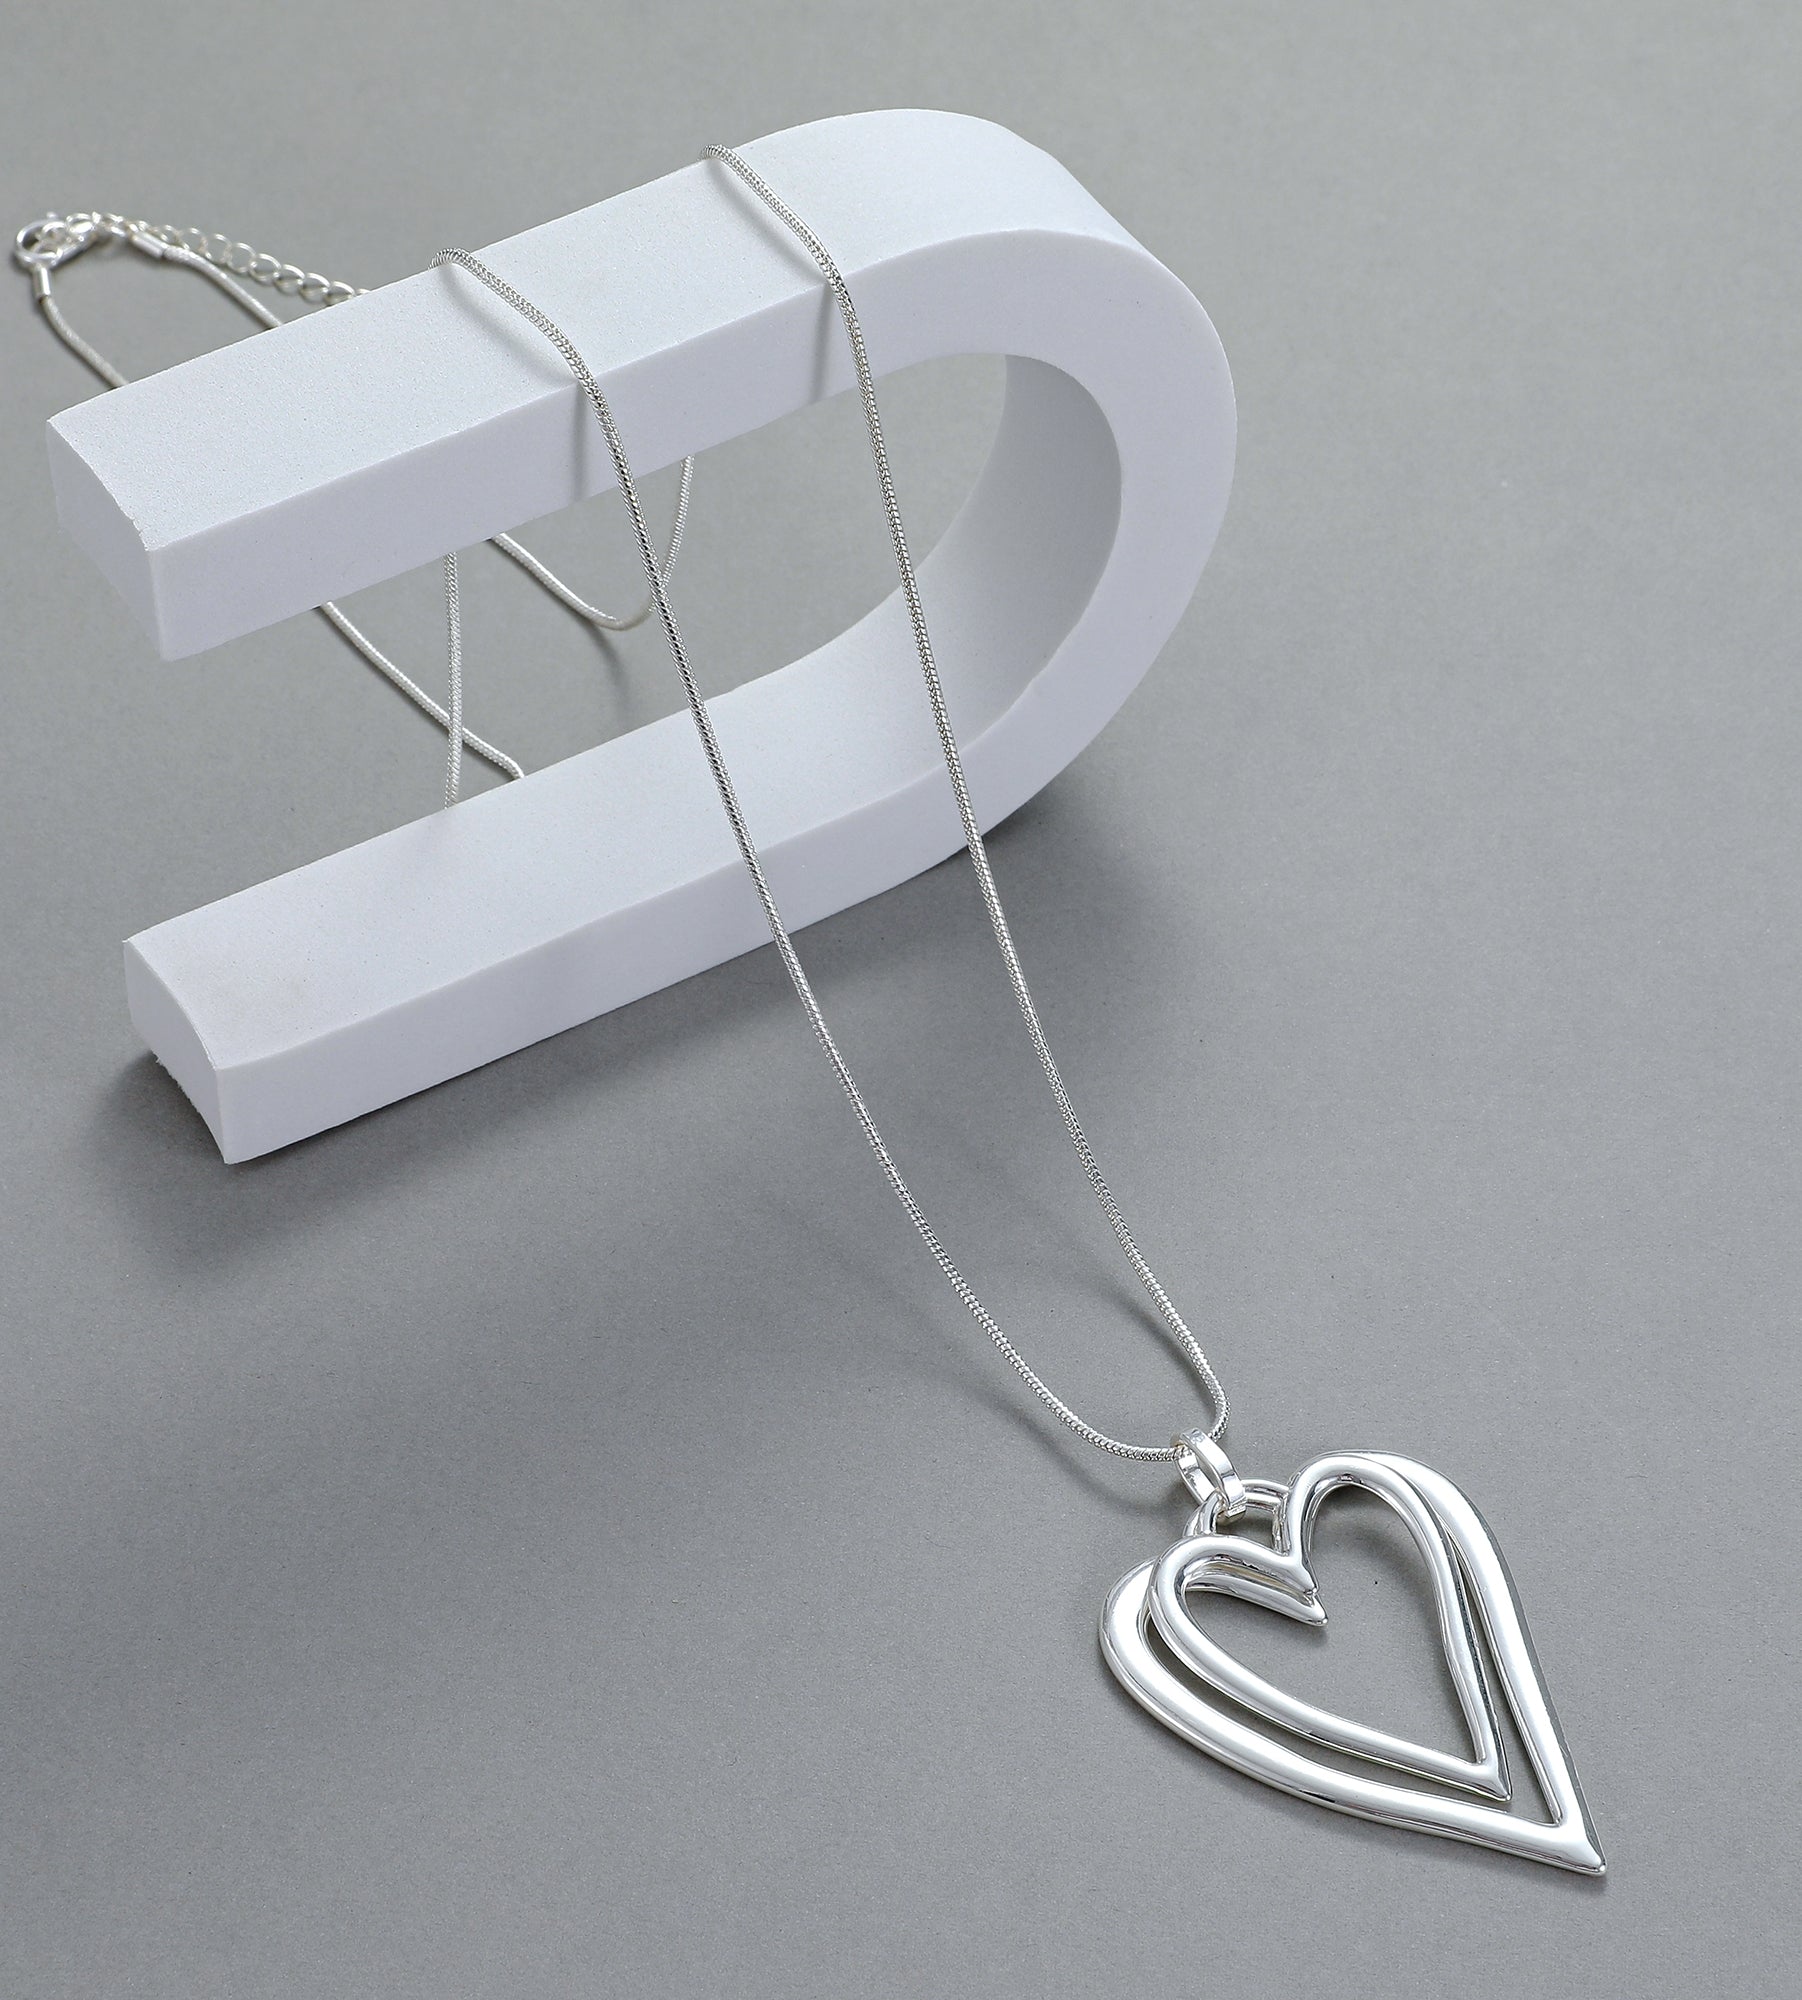 Silver Beaten Hearts Necklace - The Nancy Smillie Shop - Art, Jewellery & Designer Gifts Glasgow